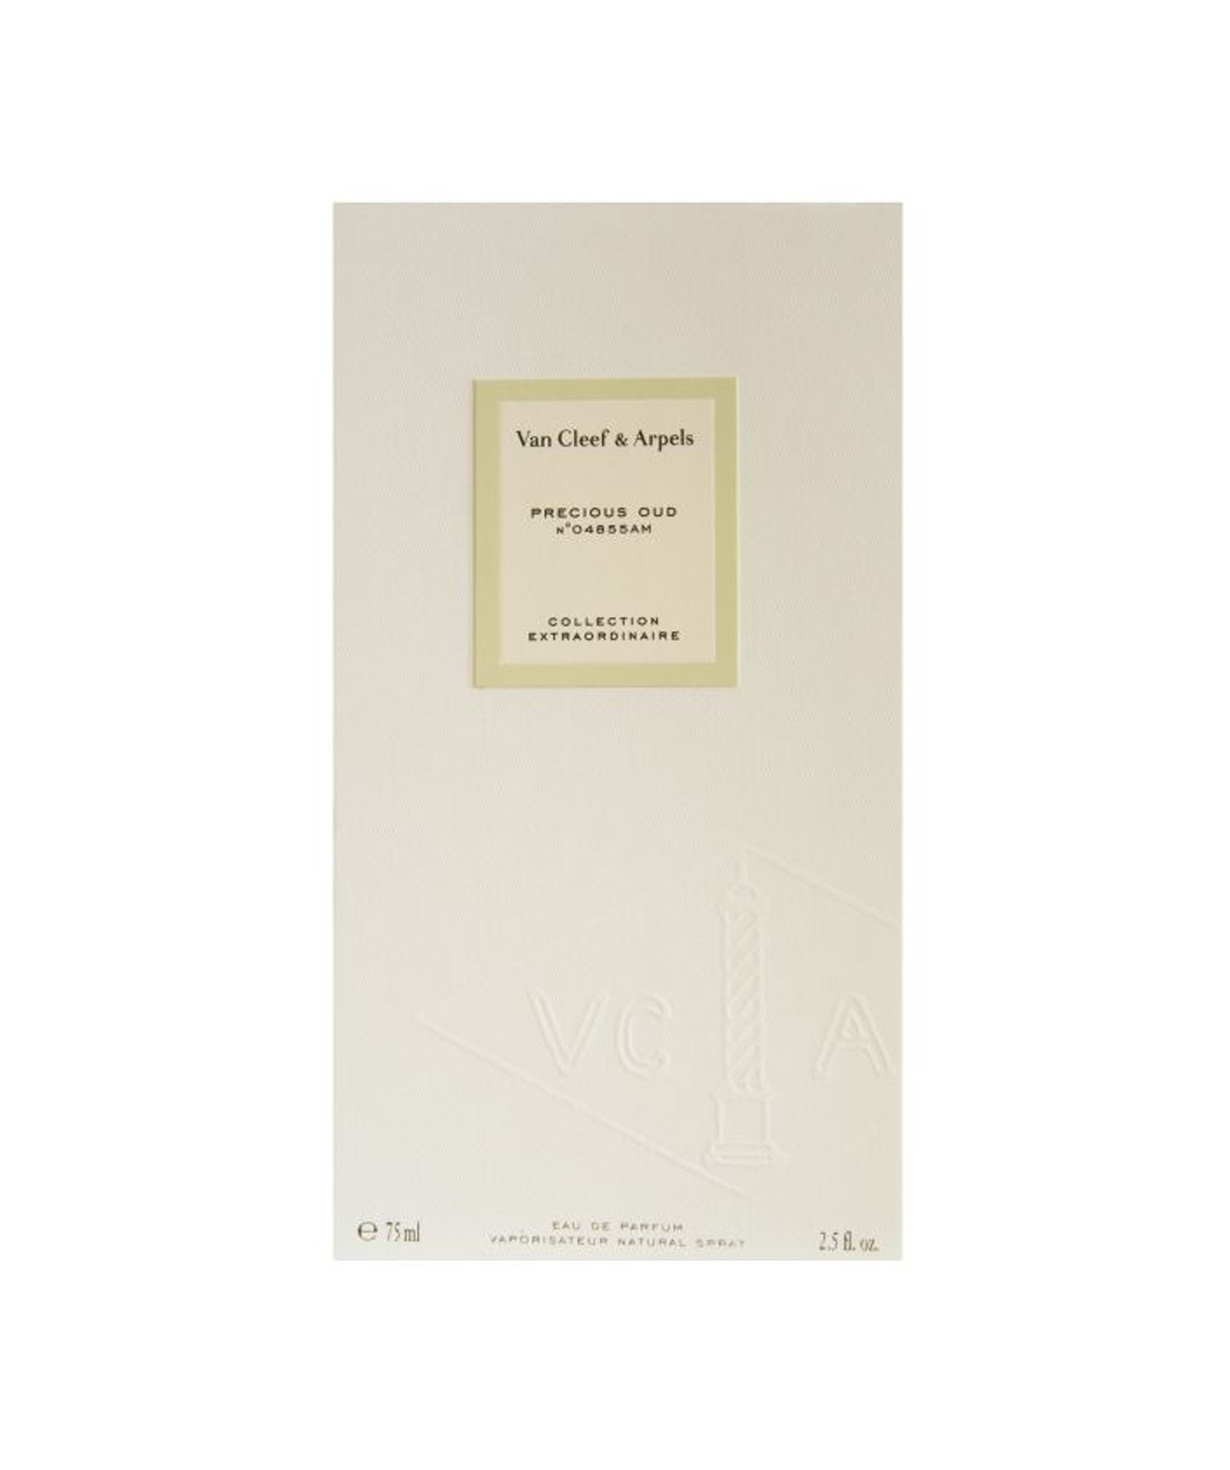 Perfume «Van Cleef & Arpels» Precious Oud CE, for women, 75 ml